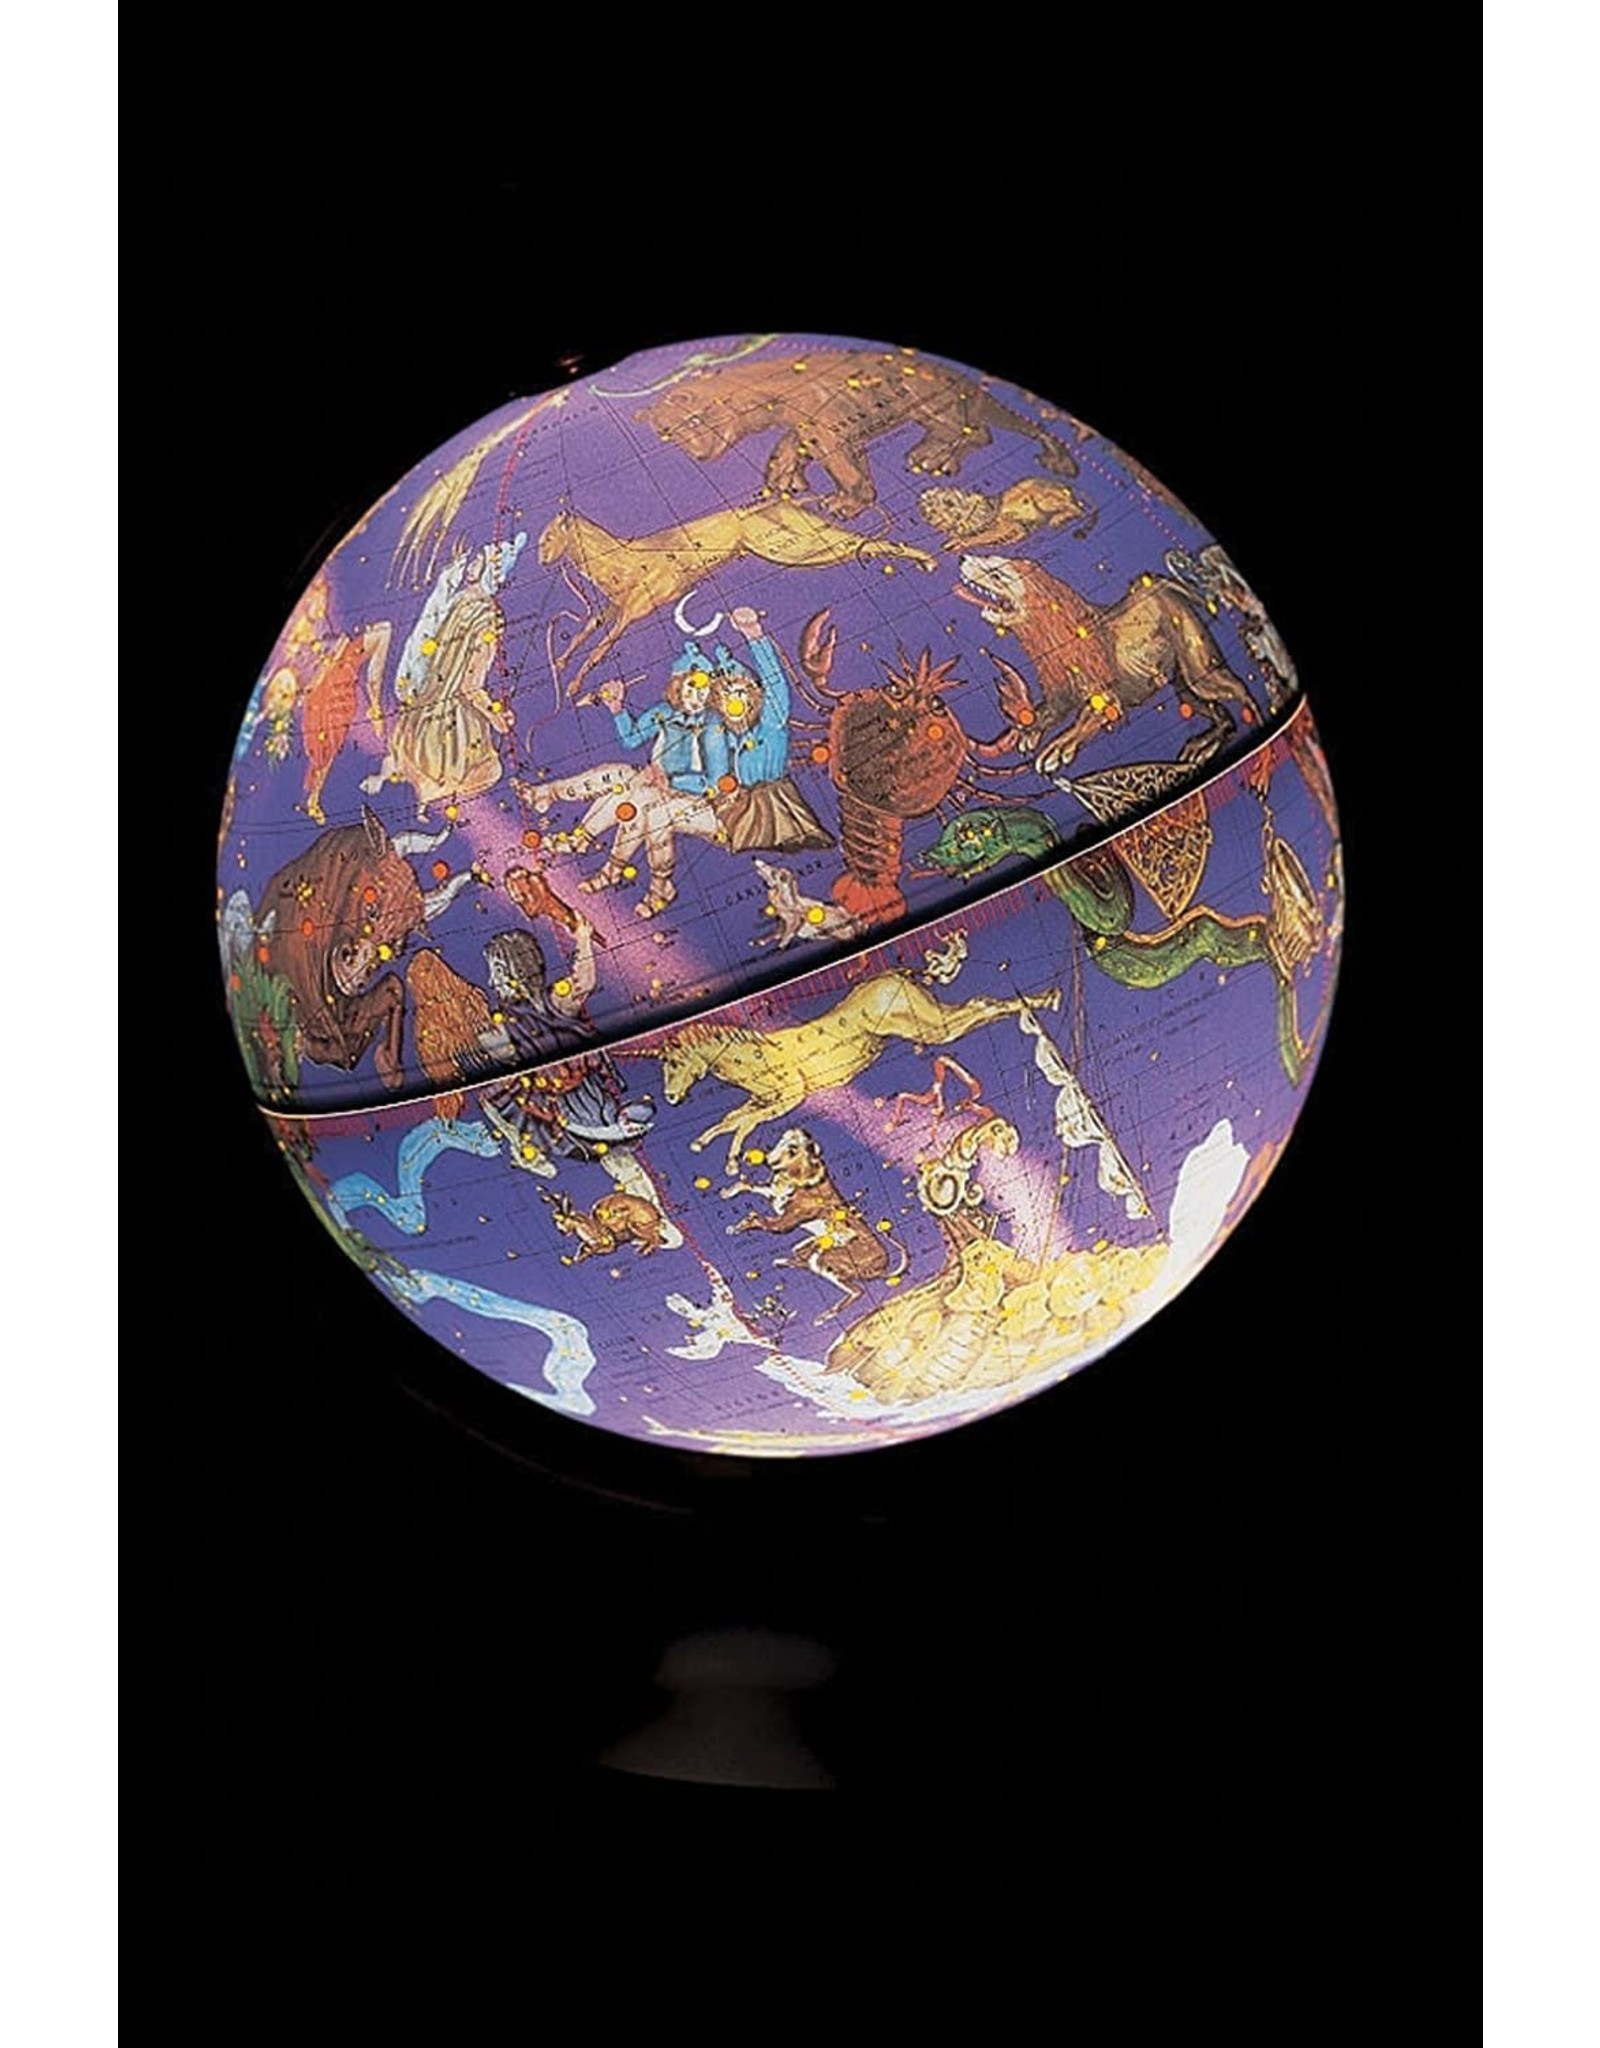 Replogle Globes Illuminating Constellation Globe 12"